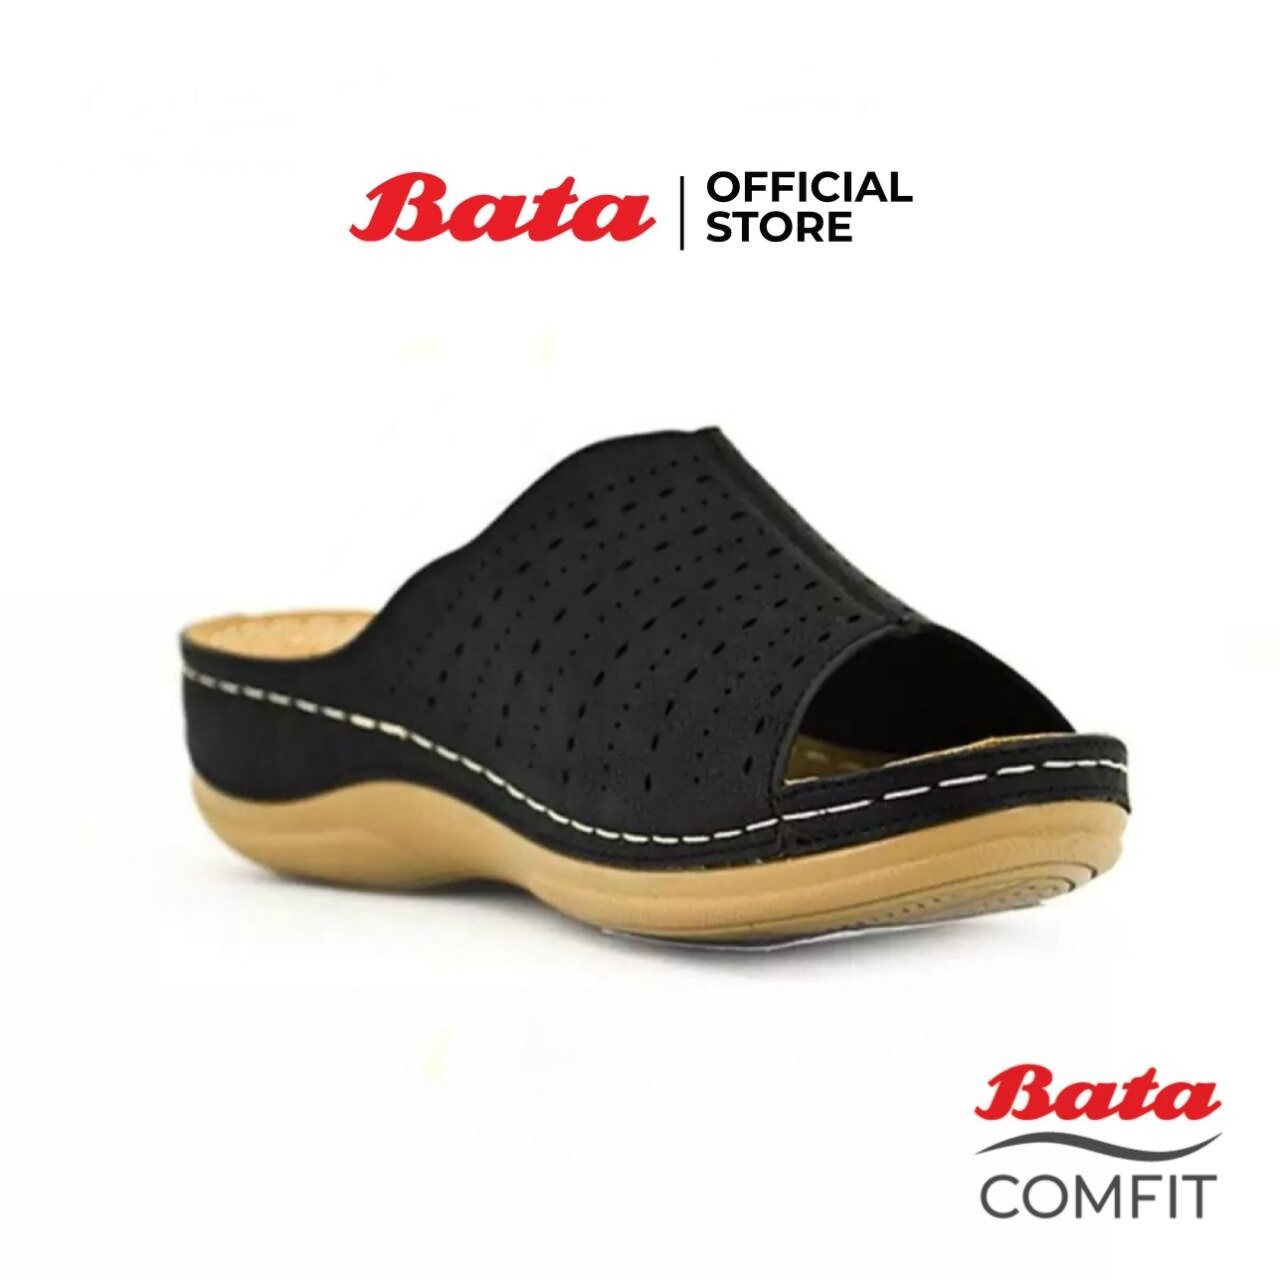 Bata COMFIT รองเท้าลำลองมีส้น SLIP ON แบบสวม สีชมพู รหัส 6615330 / สีดำ รหัส 6616330 Ladiescomfort Fashion